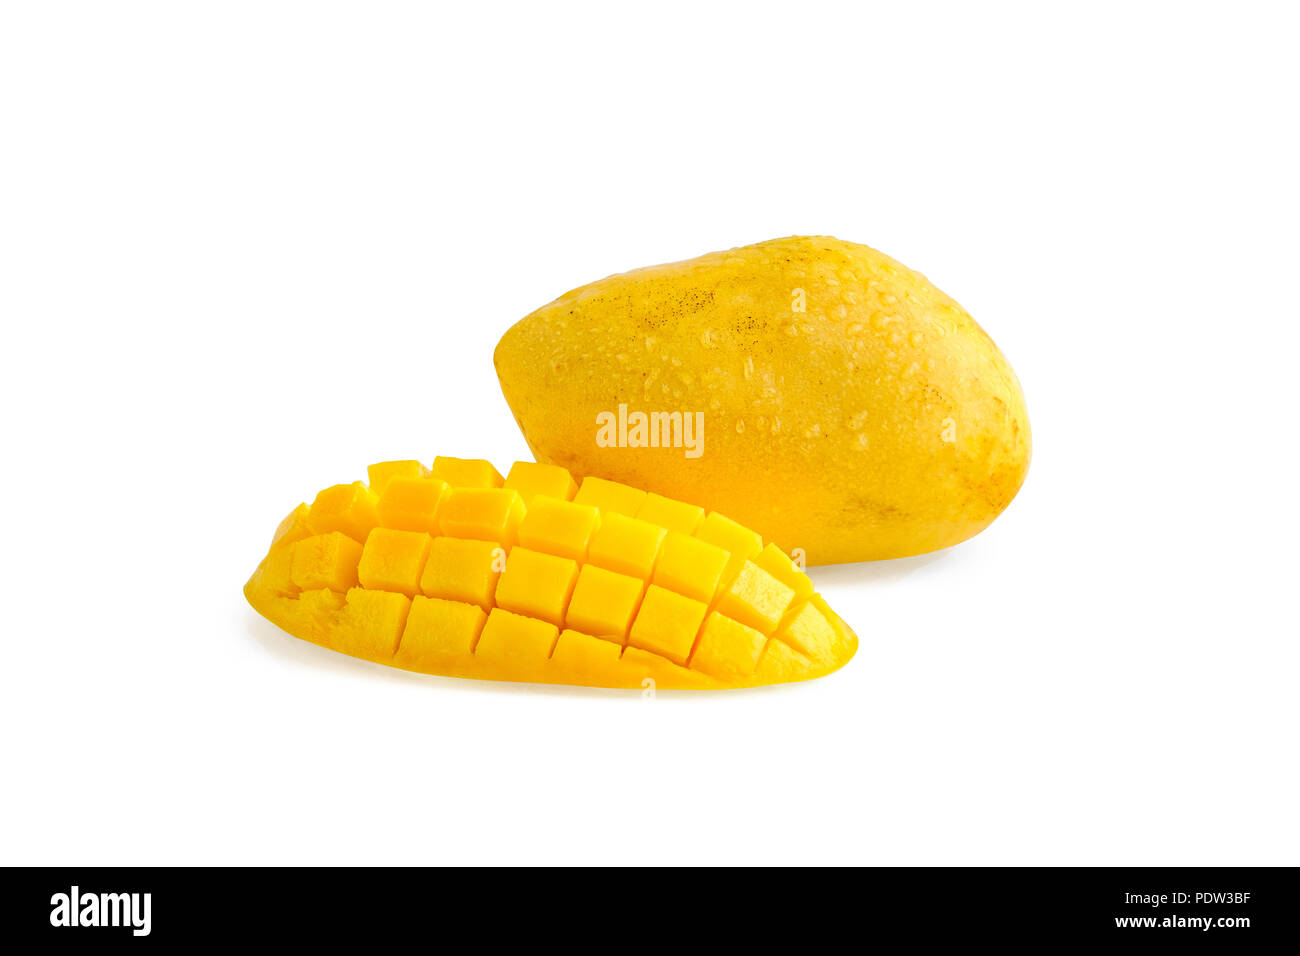 Ripe yellow carabao mango with cube sliced one on white background Stock Photo